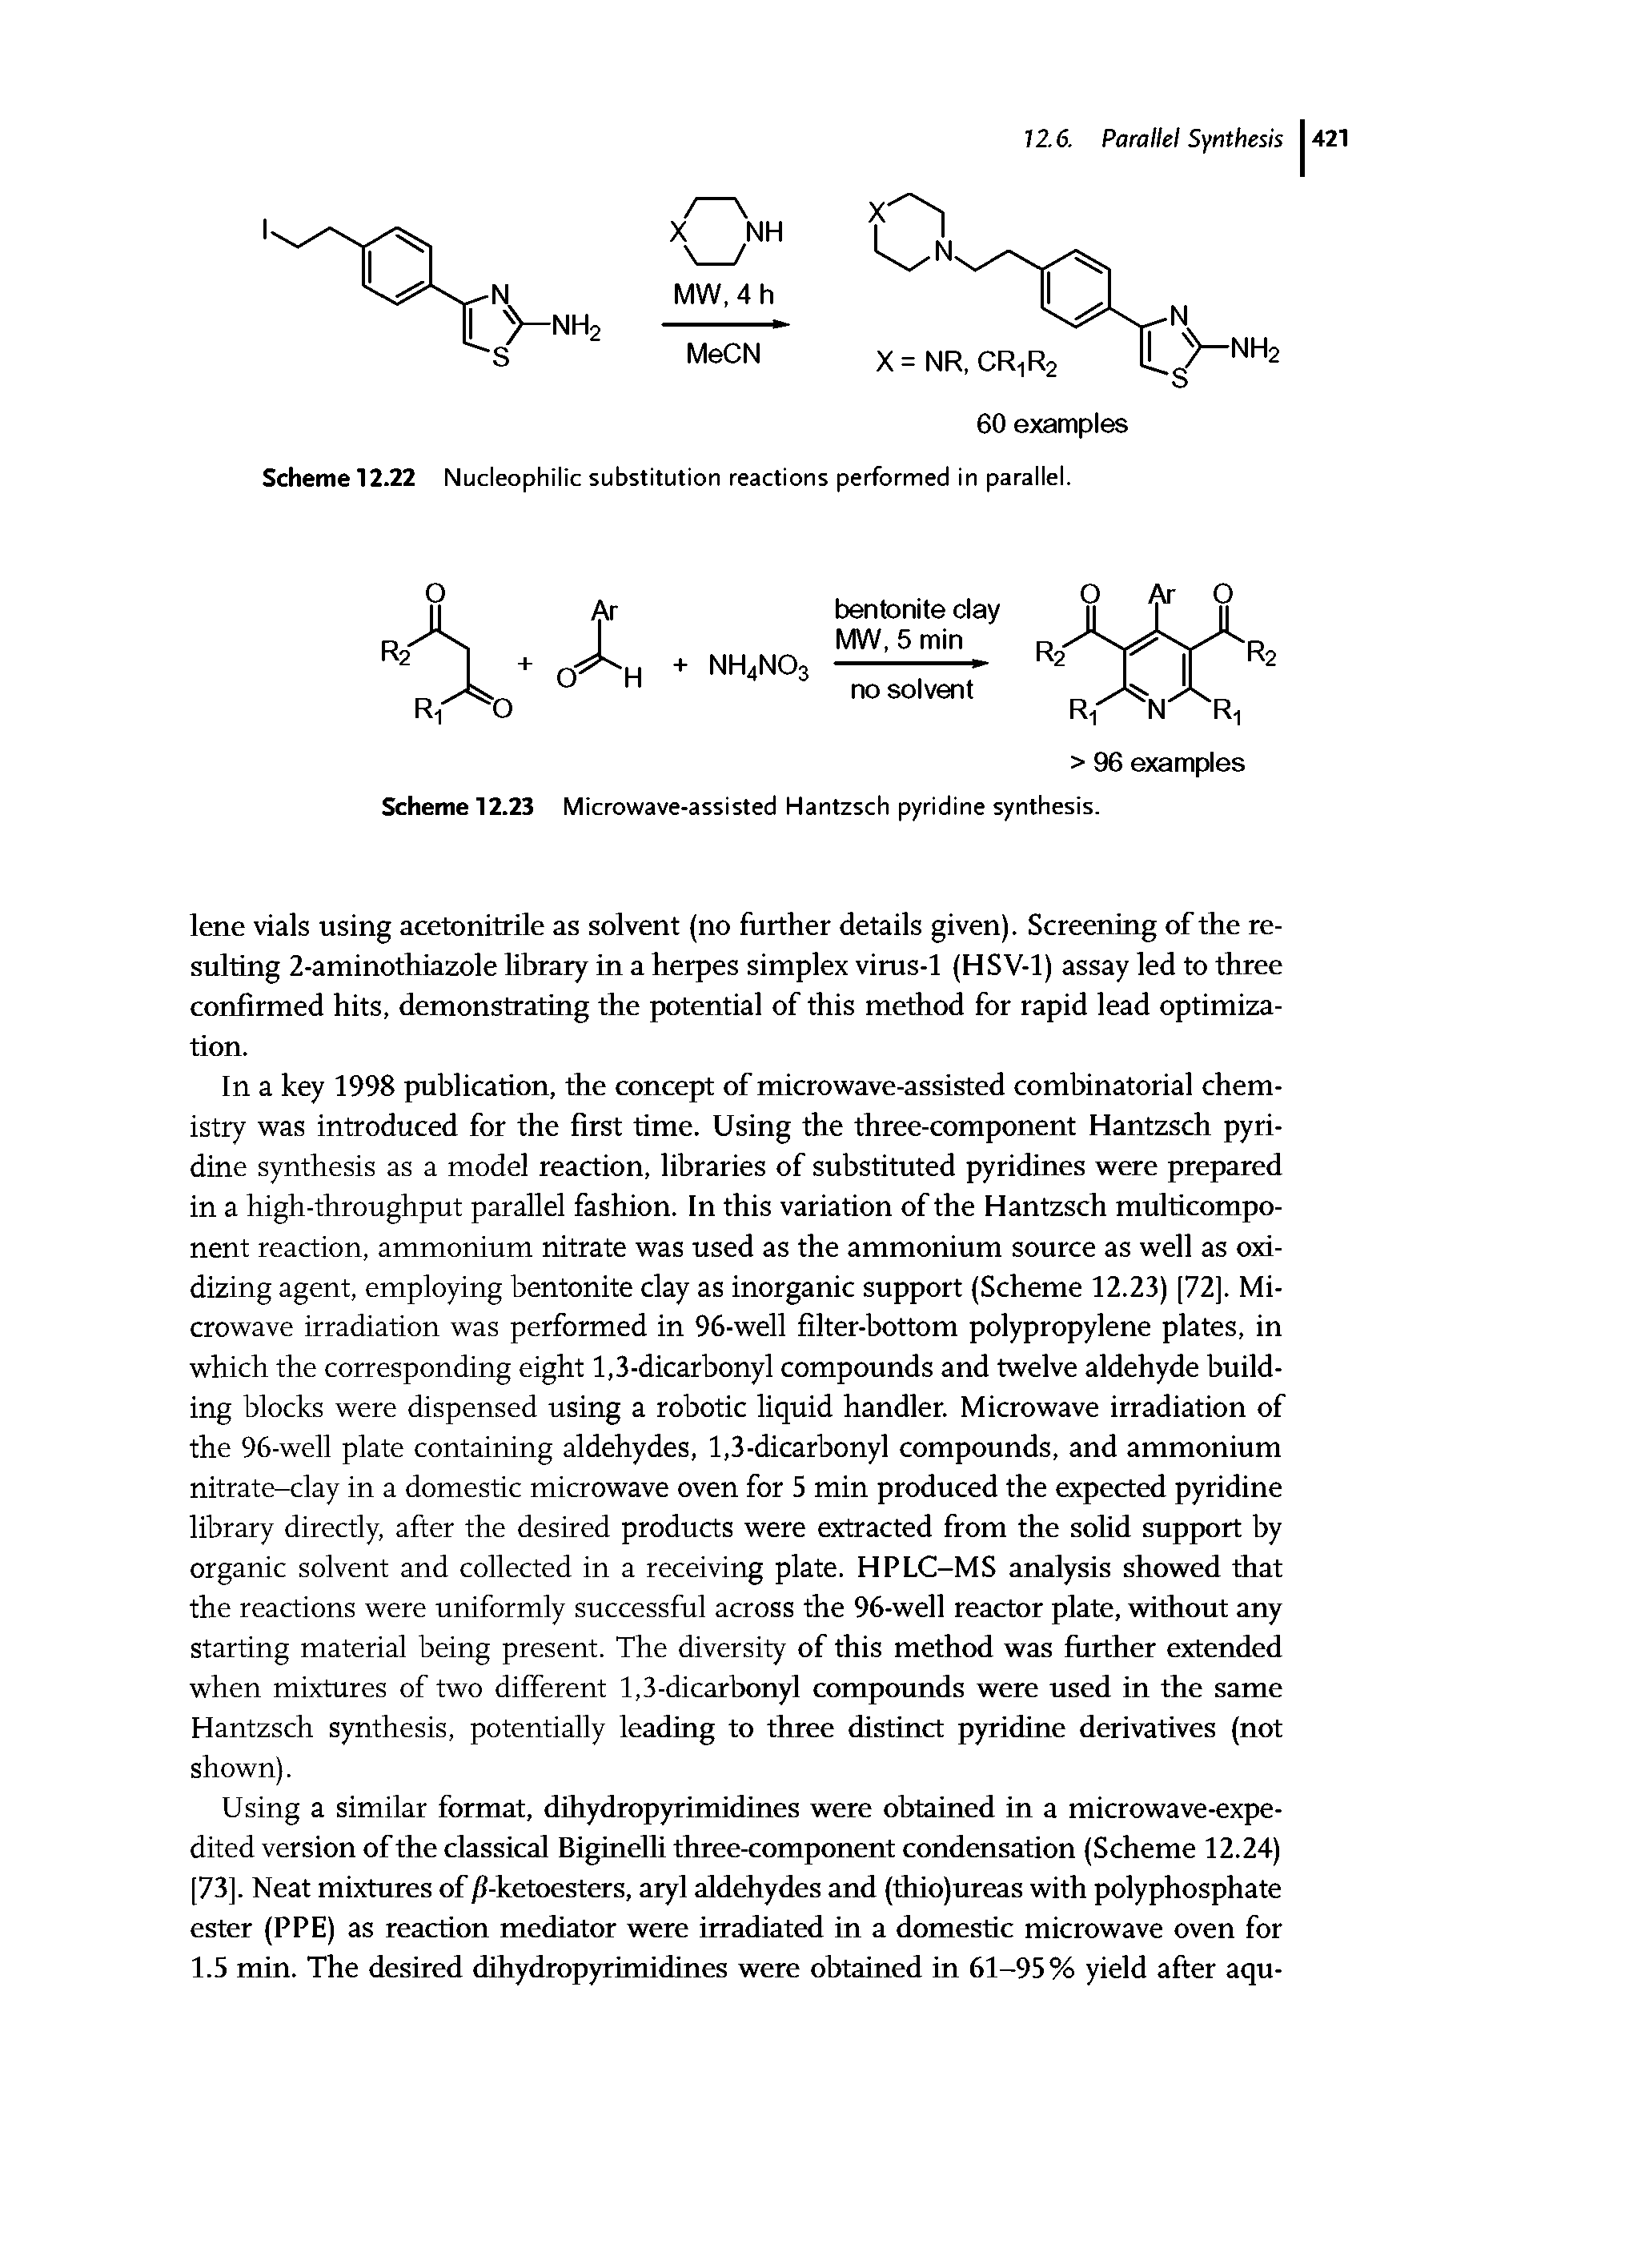 Scheme 12.23 Microwave-assisted Hantzsch pyridine synthesis.